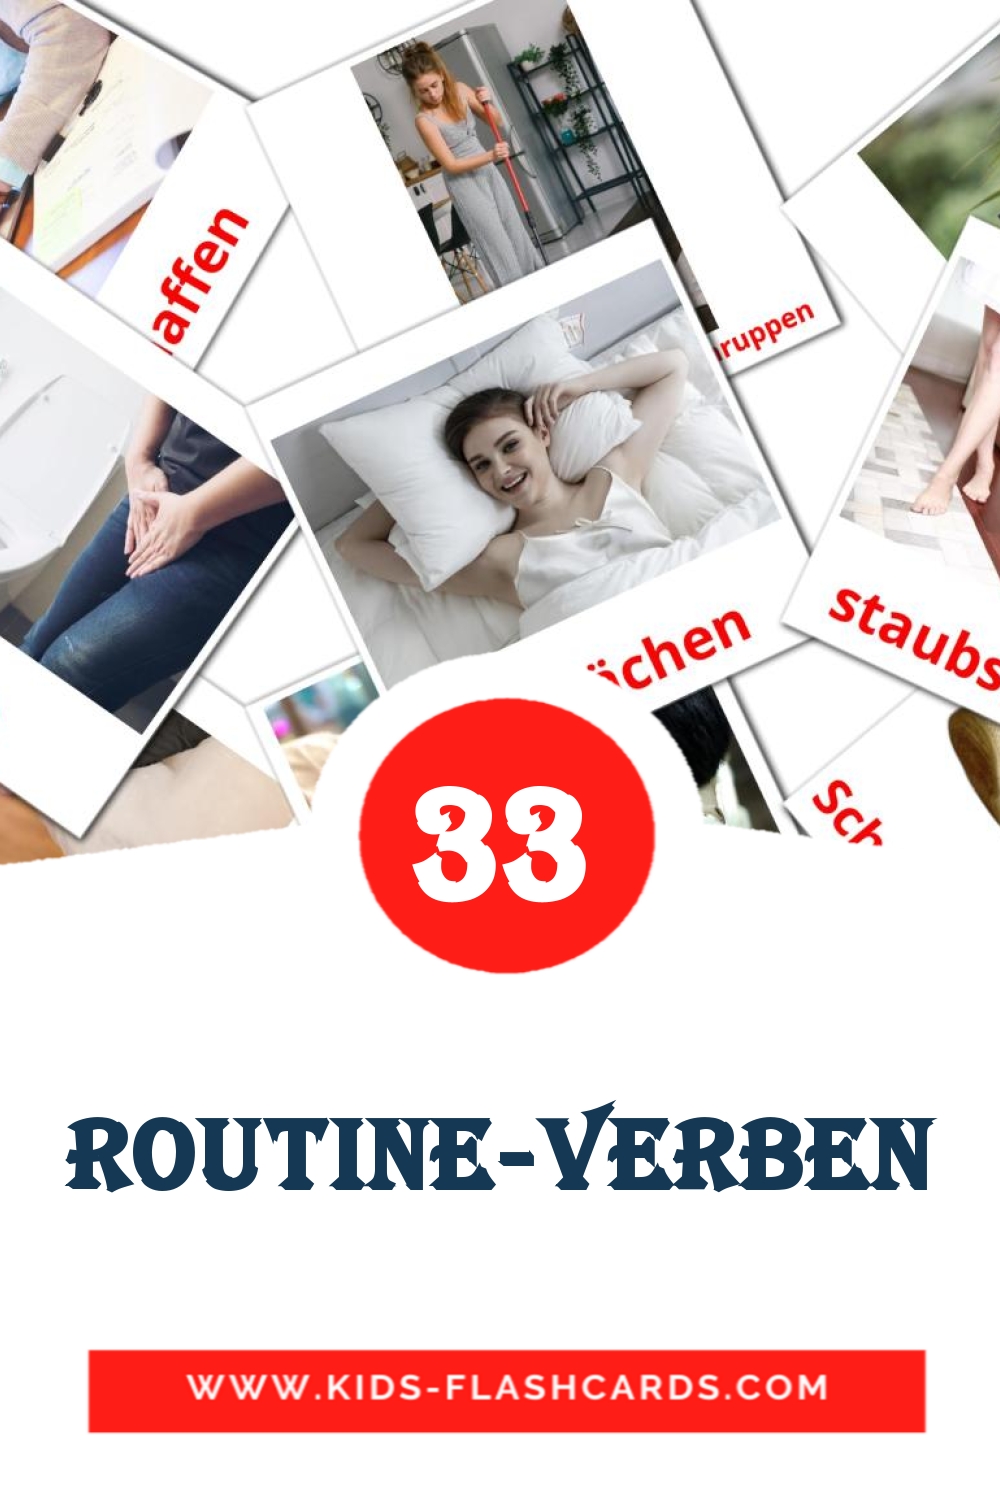 33 carte illustrate di Routine-Verben per la scuola materna in lussemburghese